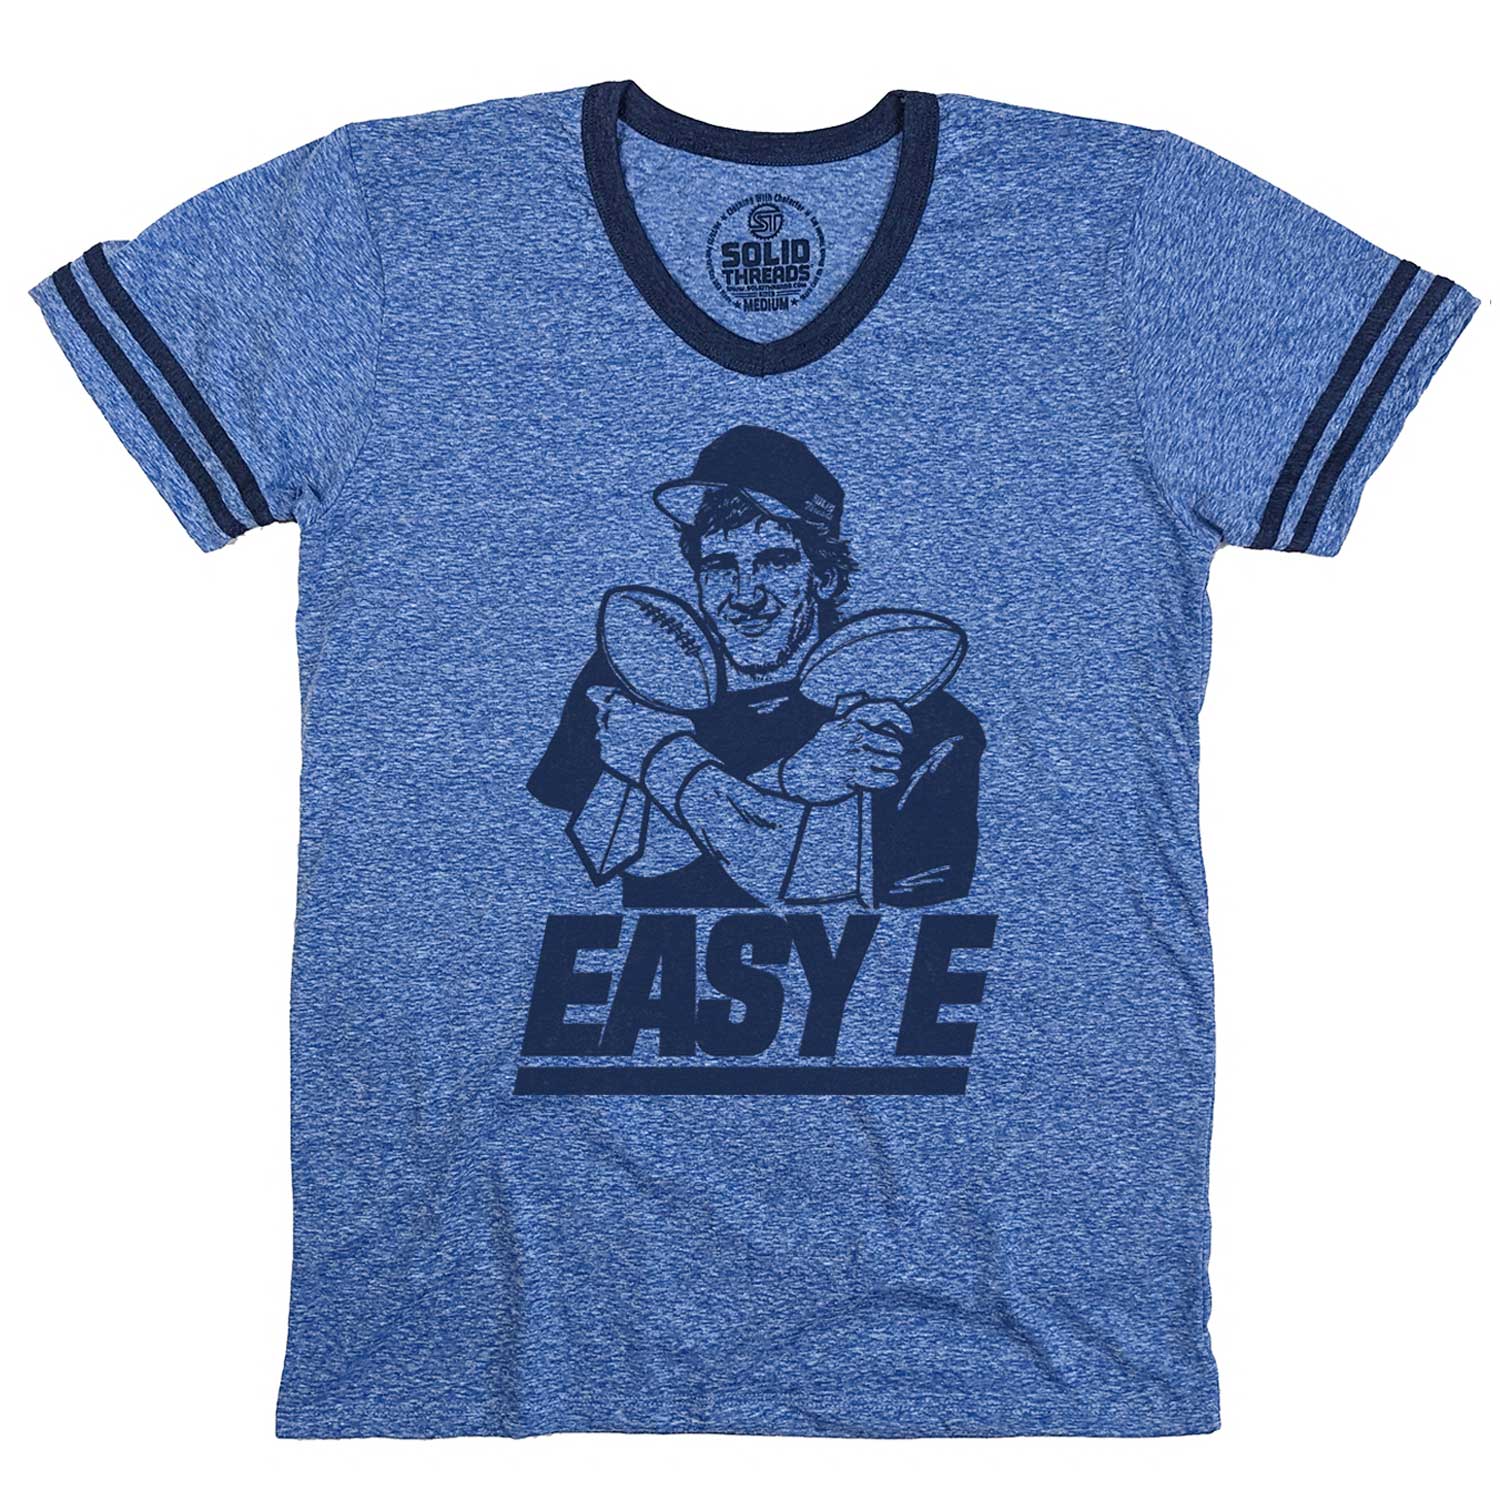 Men's Easy E Vintage Graphic V-Neck Tee | Cool Eli Manning T-shirt | Solid Threads